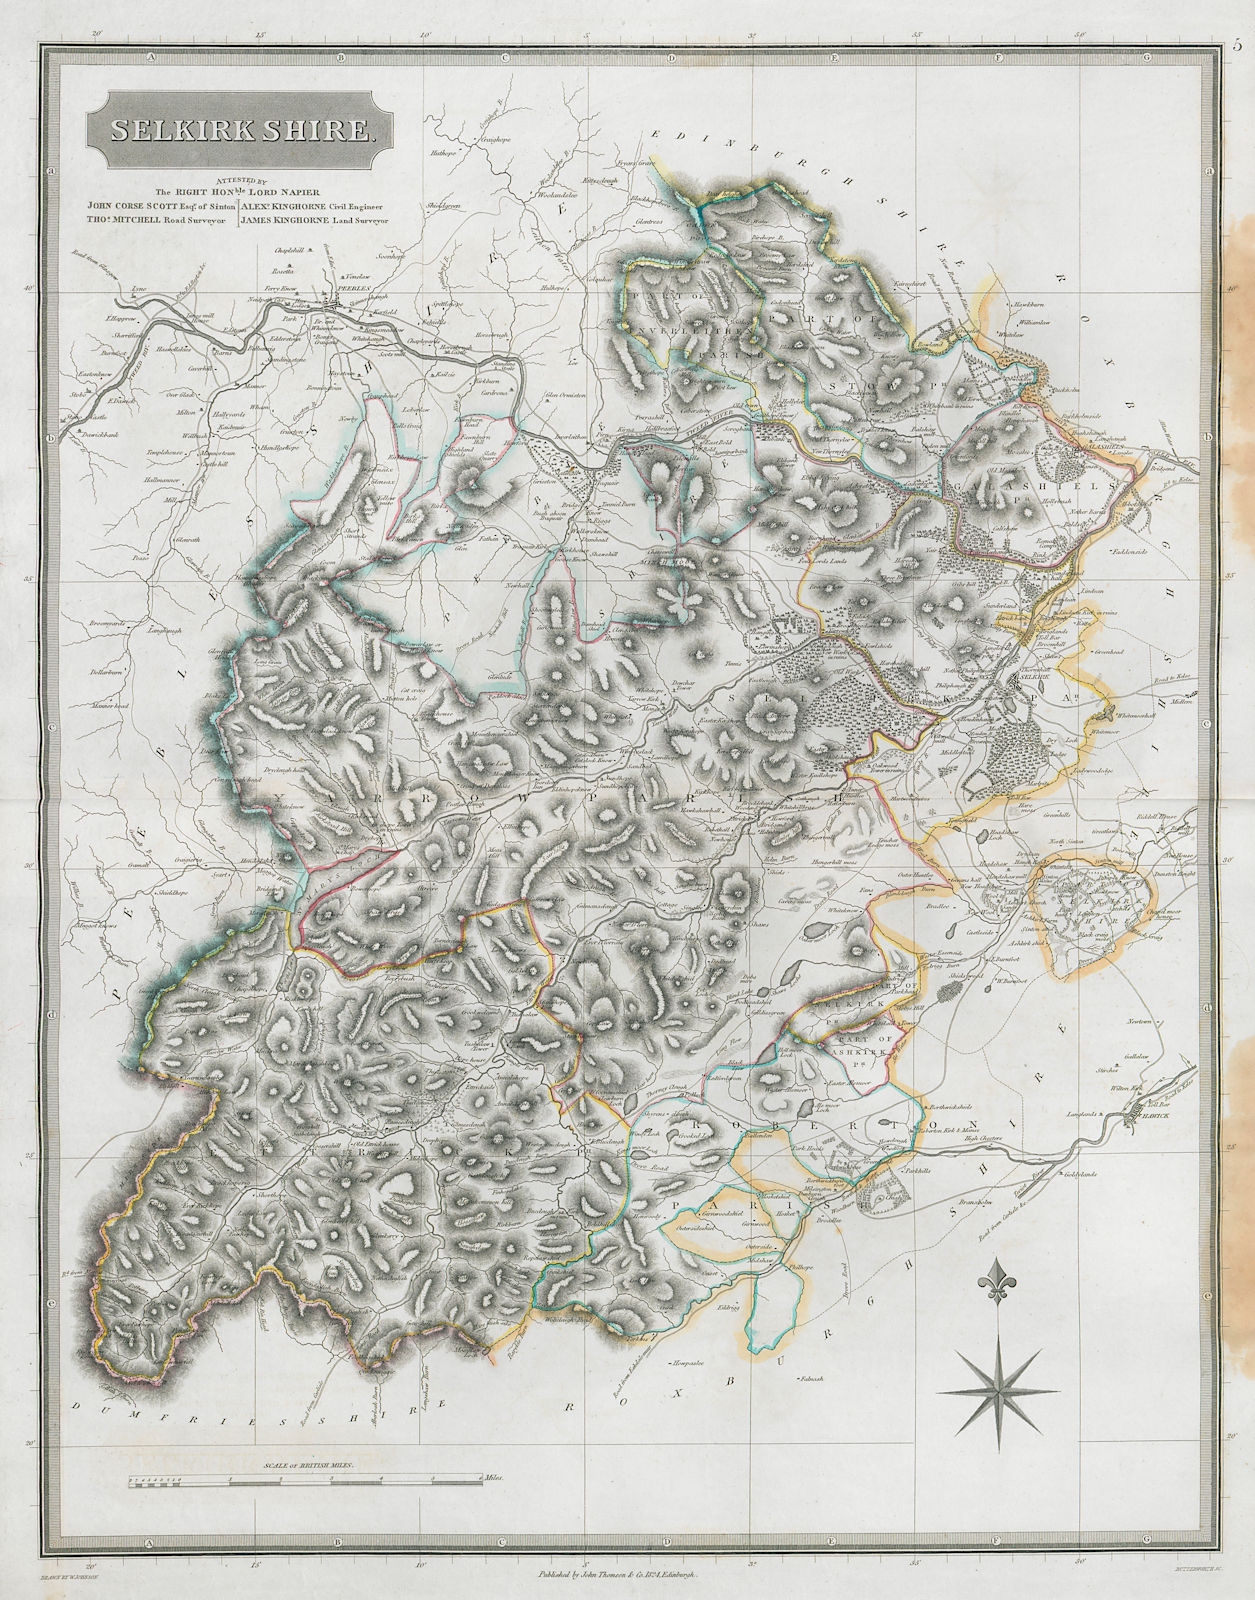 Selkirkshire county map. Peebles Innerleithen Galashiels Ettrick. THOMSON 1832